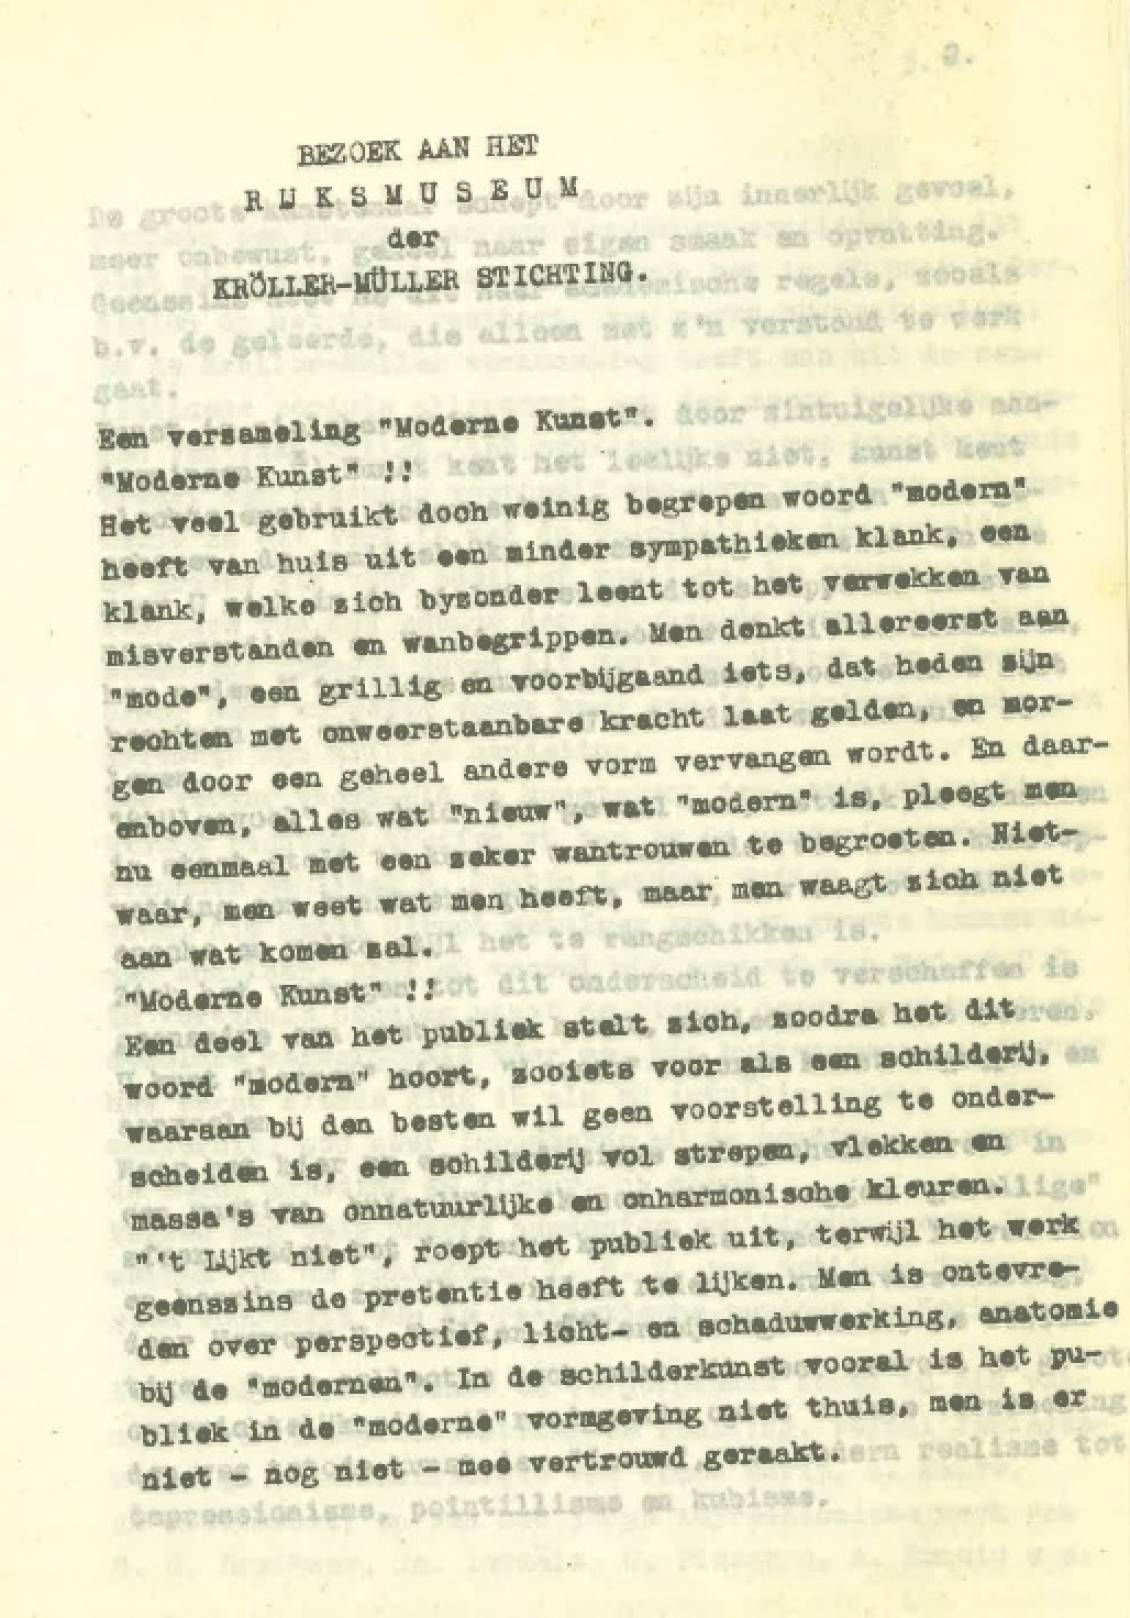 Willy Auping, Opstel over de collectie van Sichting Kröller-Müller, 9 juli 1937